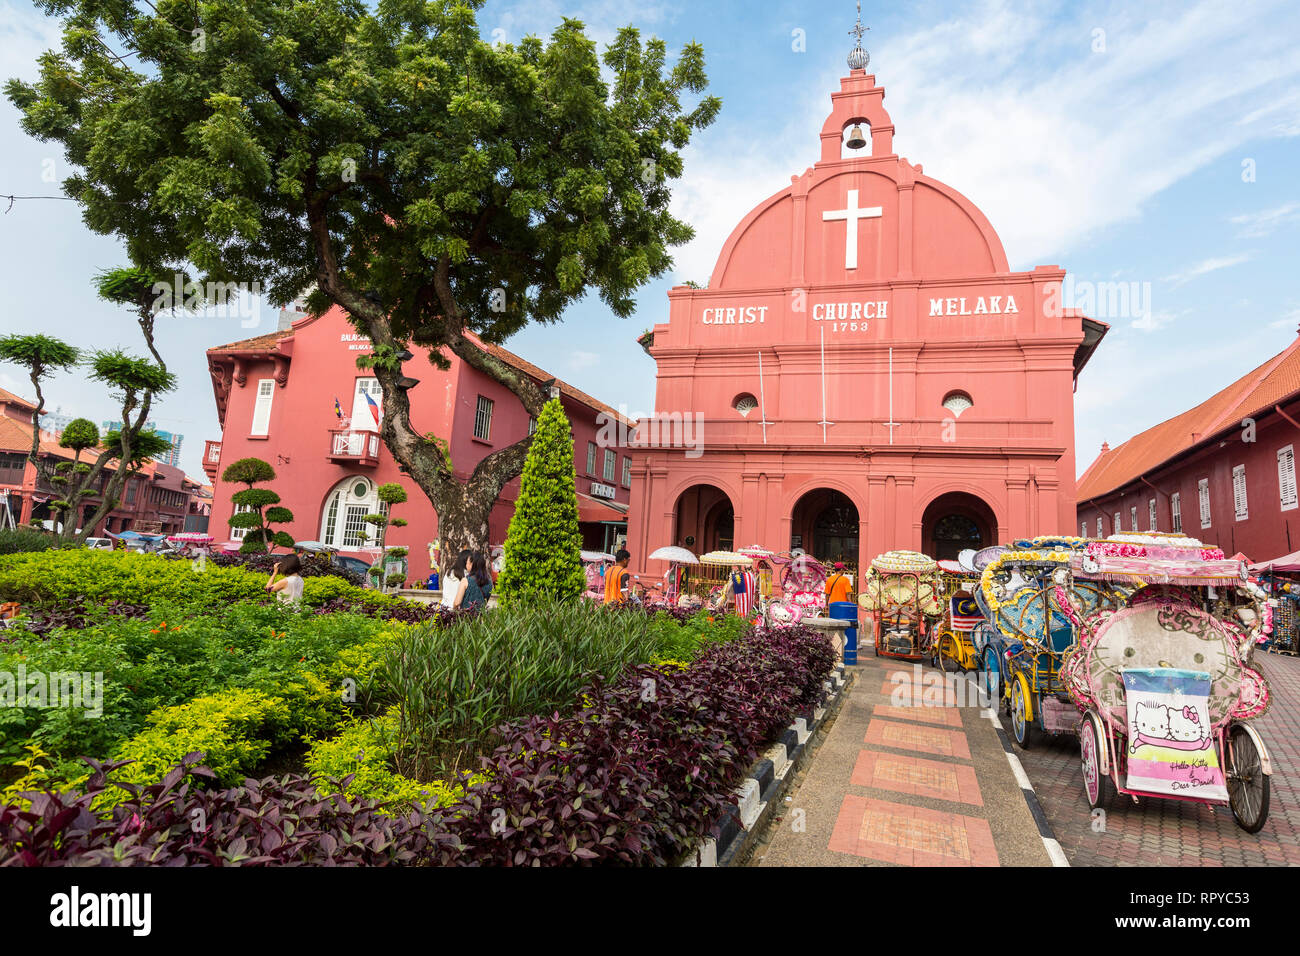 Trishaws Await Tourists in front of Christ Church, Built 1753, Melaka, Malaysia. Stock Photo